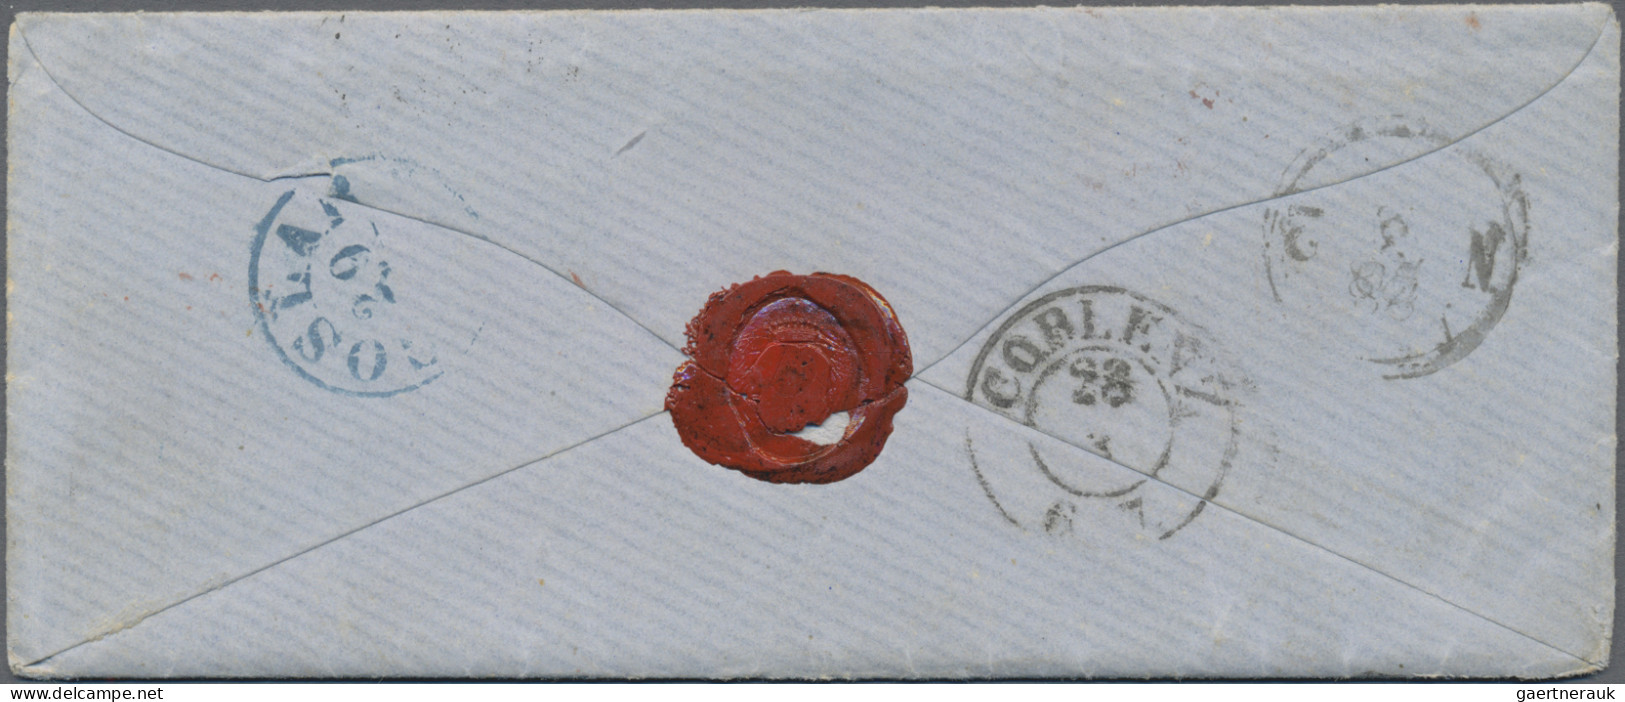 Italy -  Pre Adhesives  / Stampless Covers: 1857 (Rome - Milan - Zürich - Bonn - - 1. ...-1850 Prefilatelia